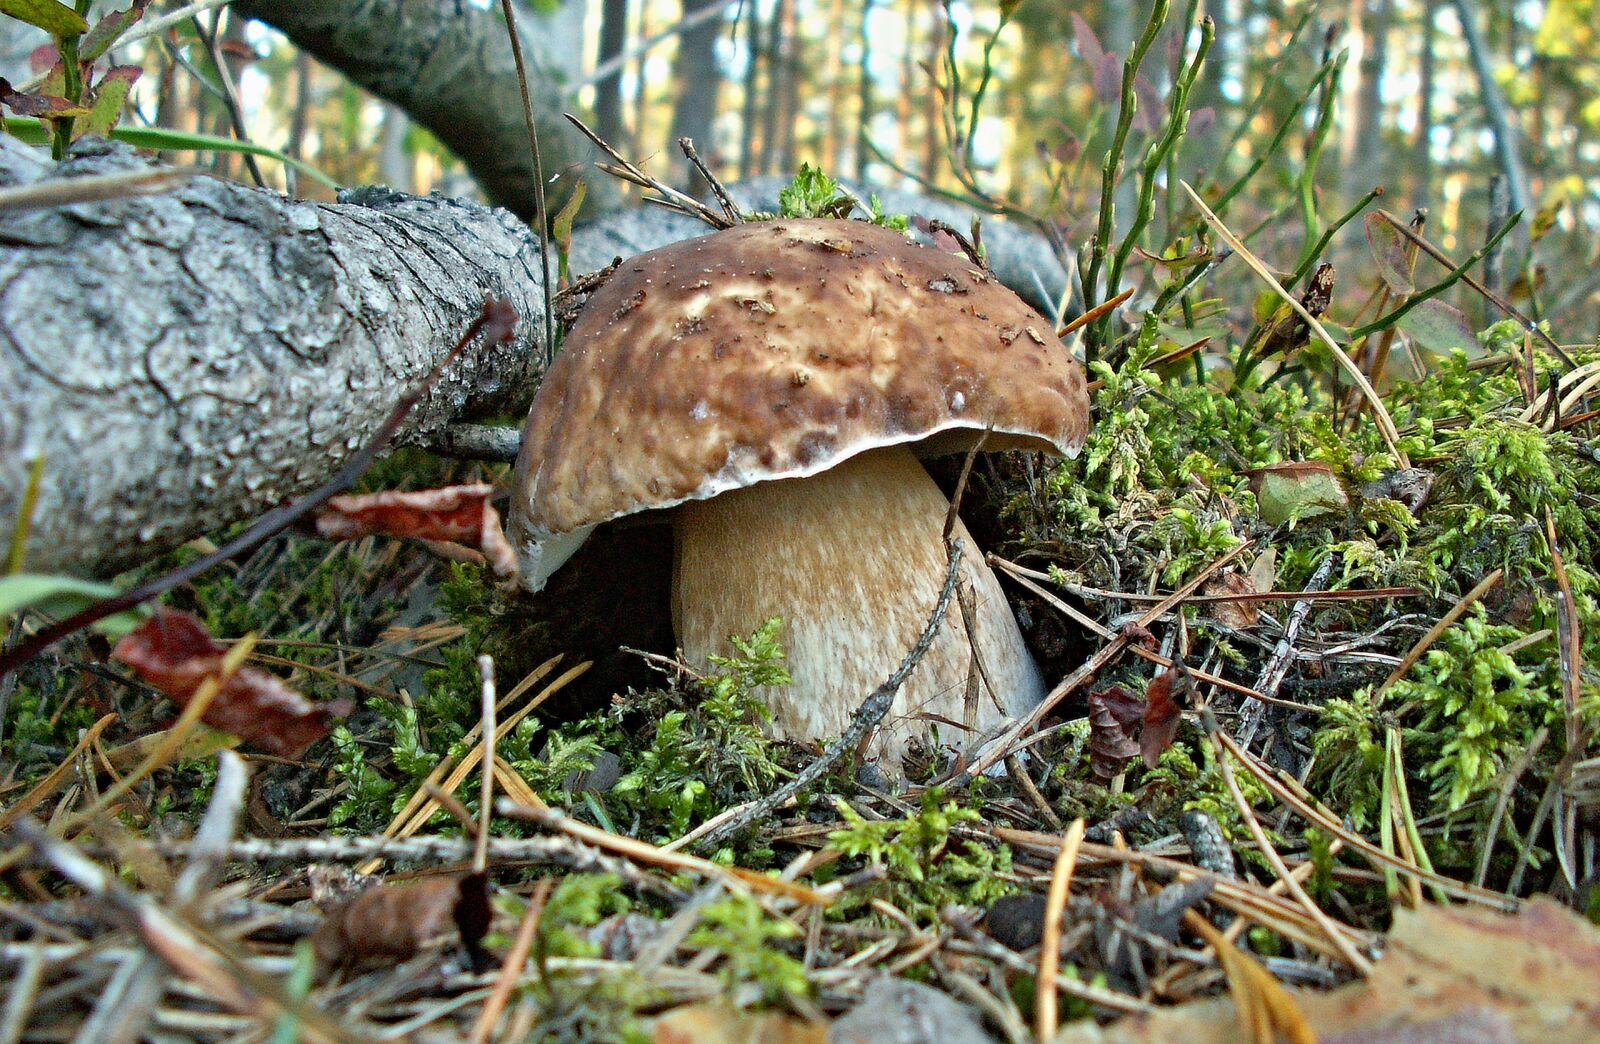 KONICA MINOLTA DiMAGE Z5 sample photo. Nature, mushrooms, mushroom photography